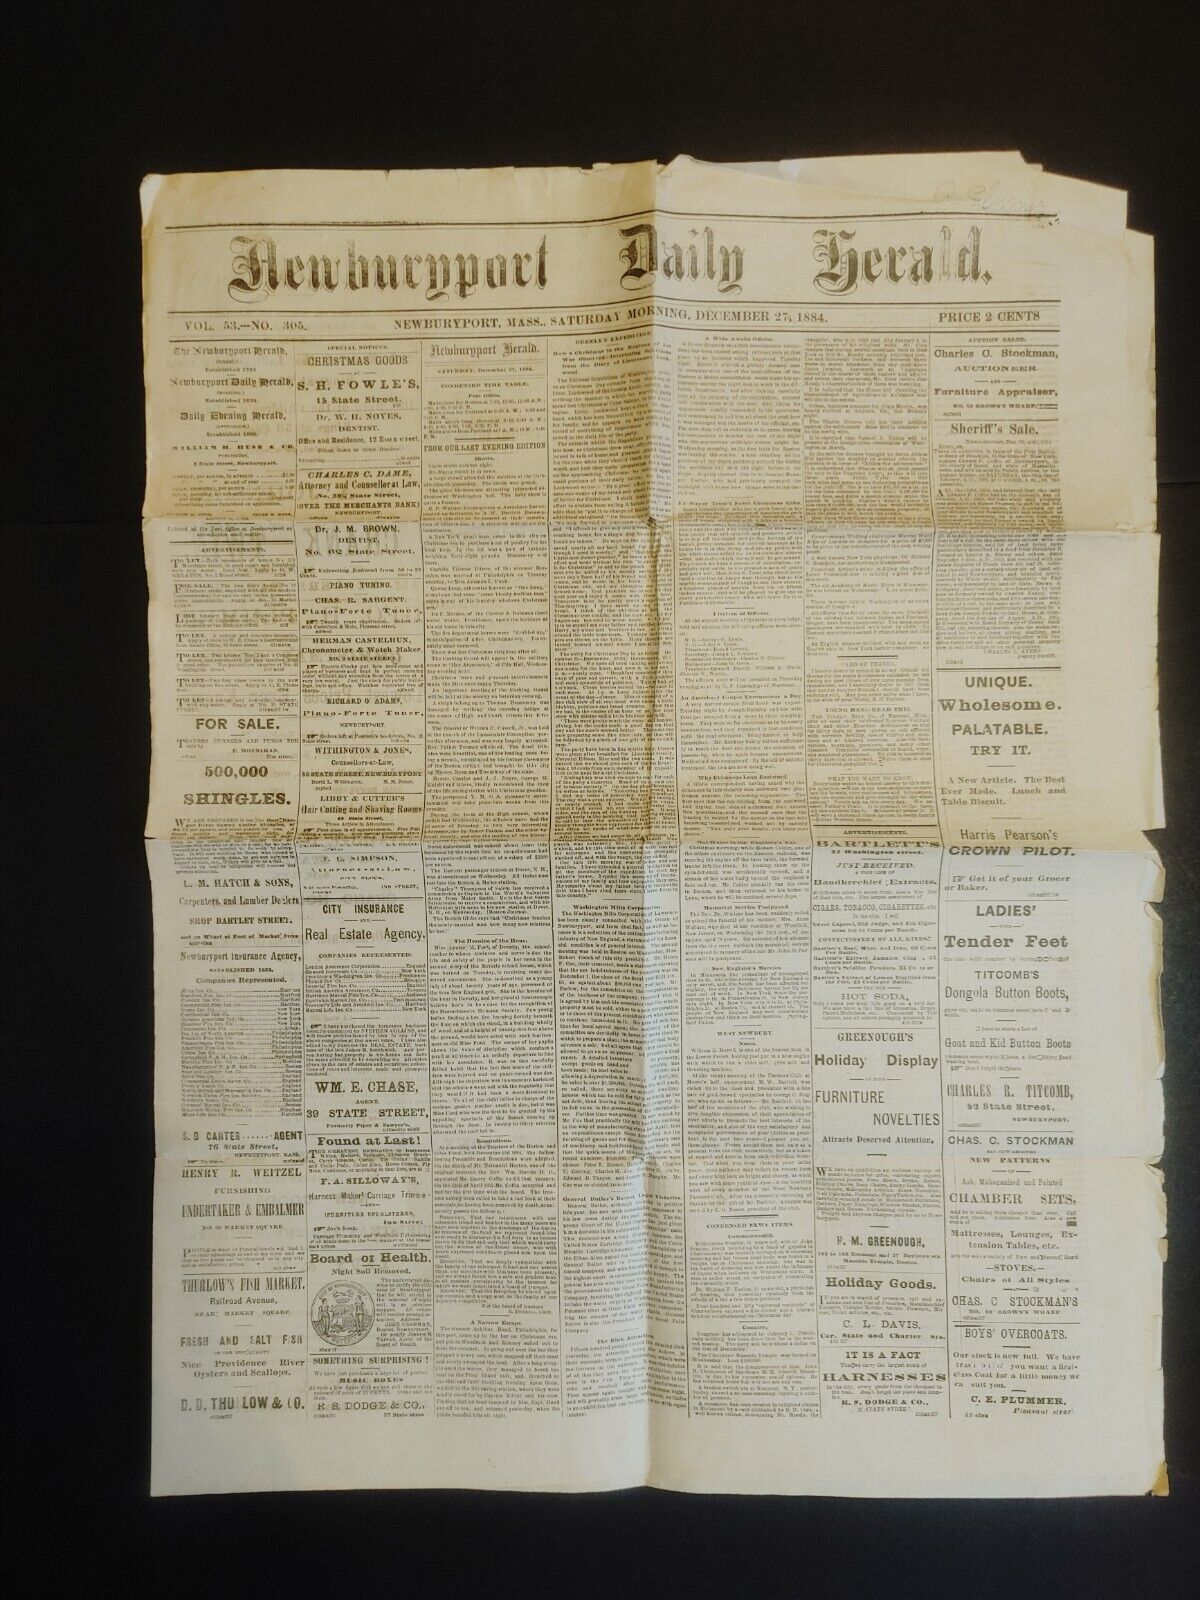 DECEMBER 27, 1884 NEWBURYPORT DAILY HERALD NEWSPAPER MASSACHUSETTS